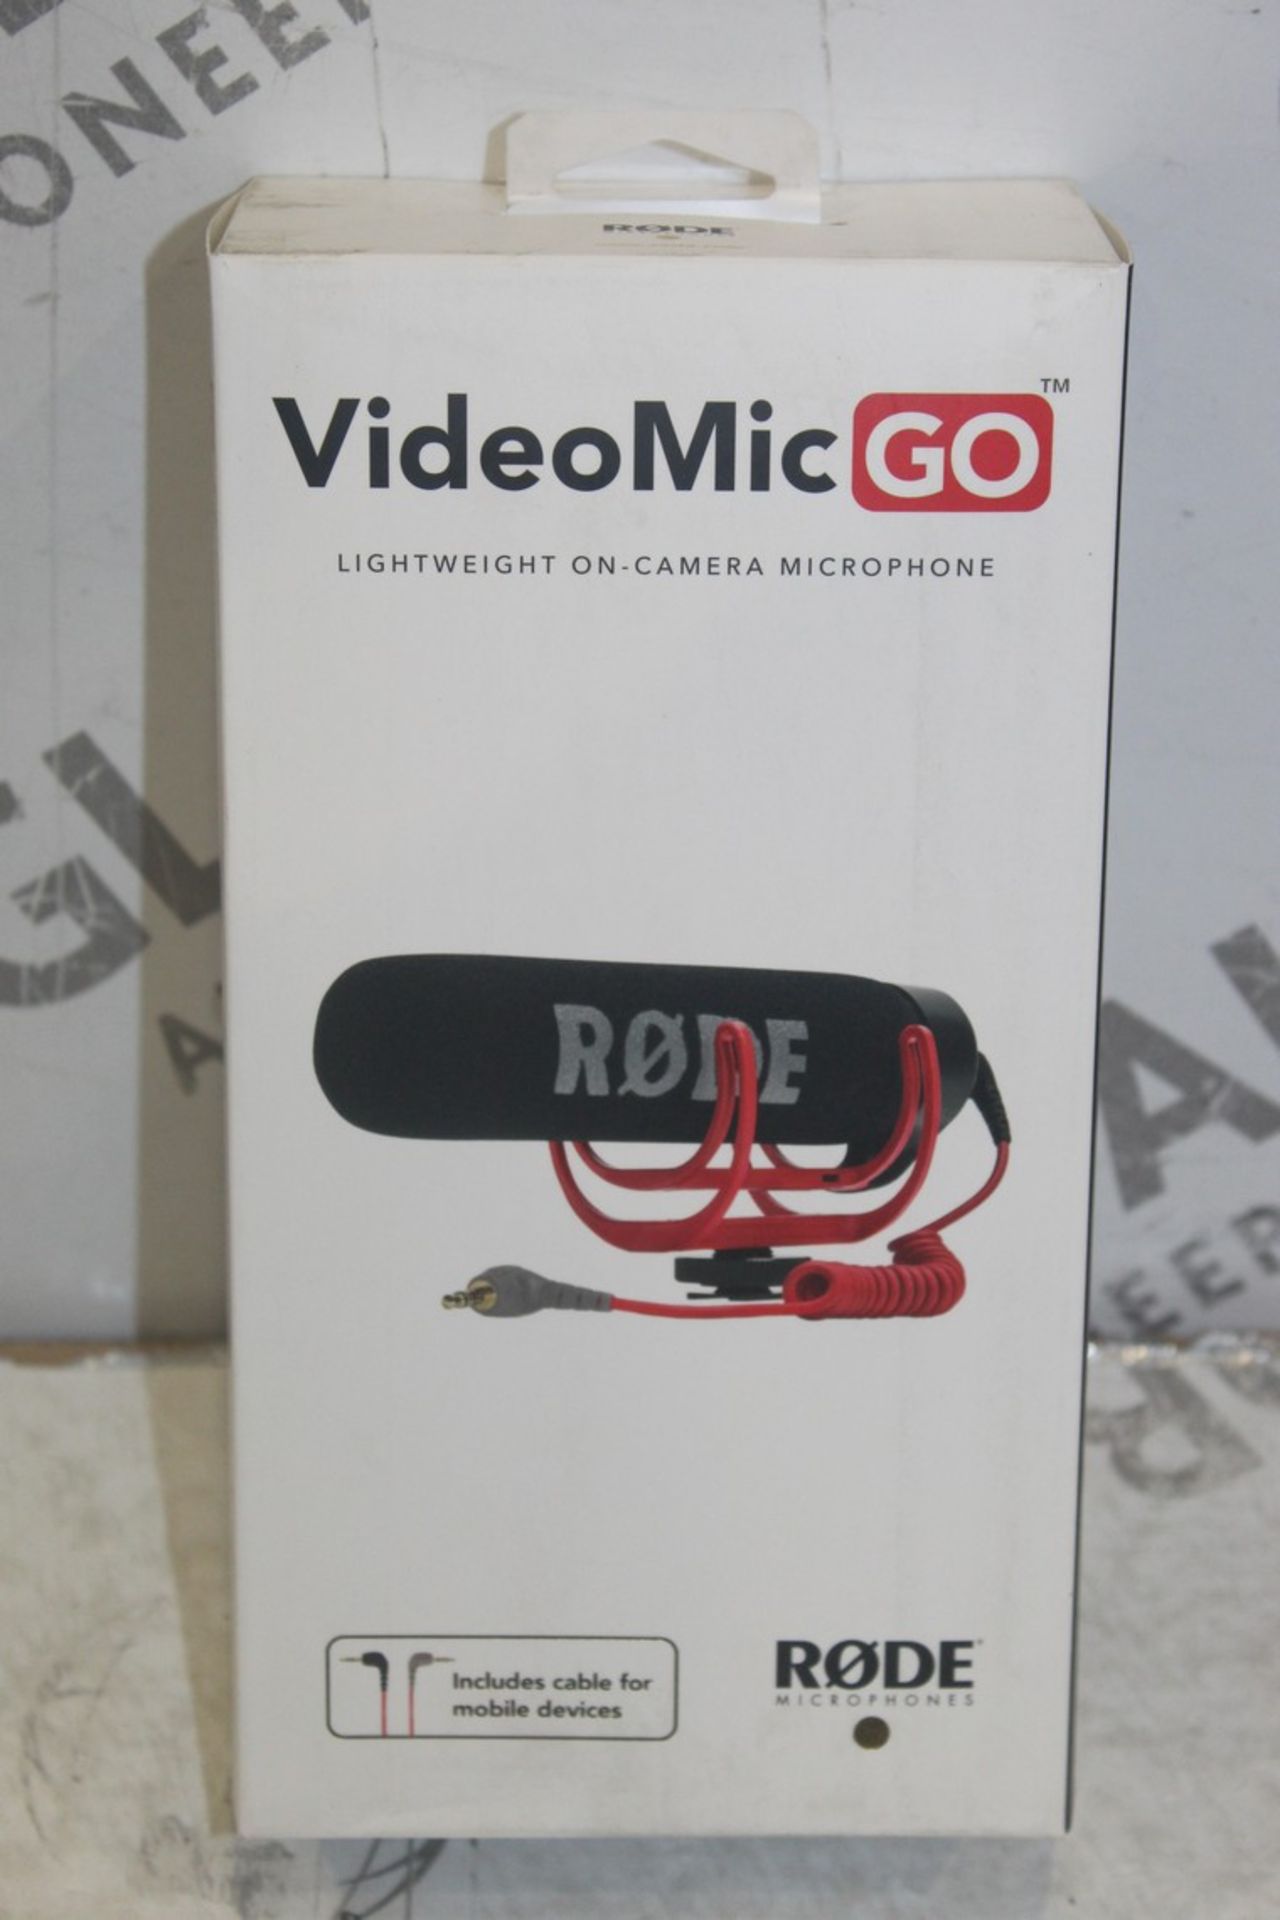 Boxed Rodi Video Mic Go Light Weight On Camera Mic